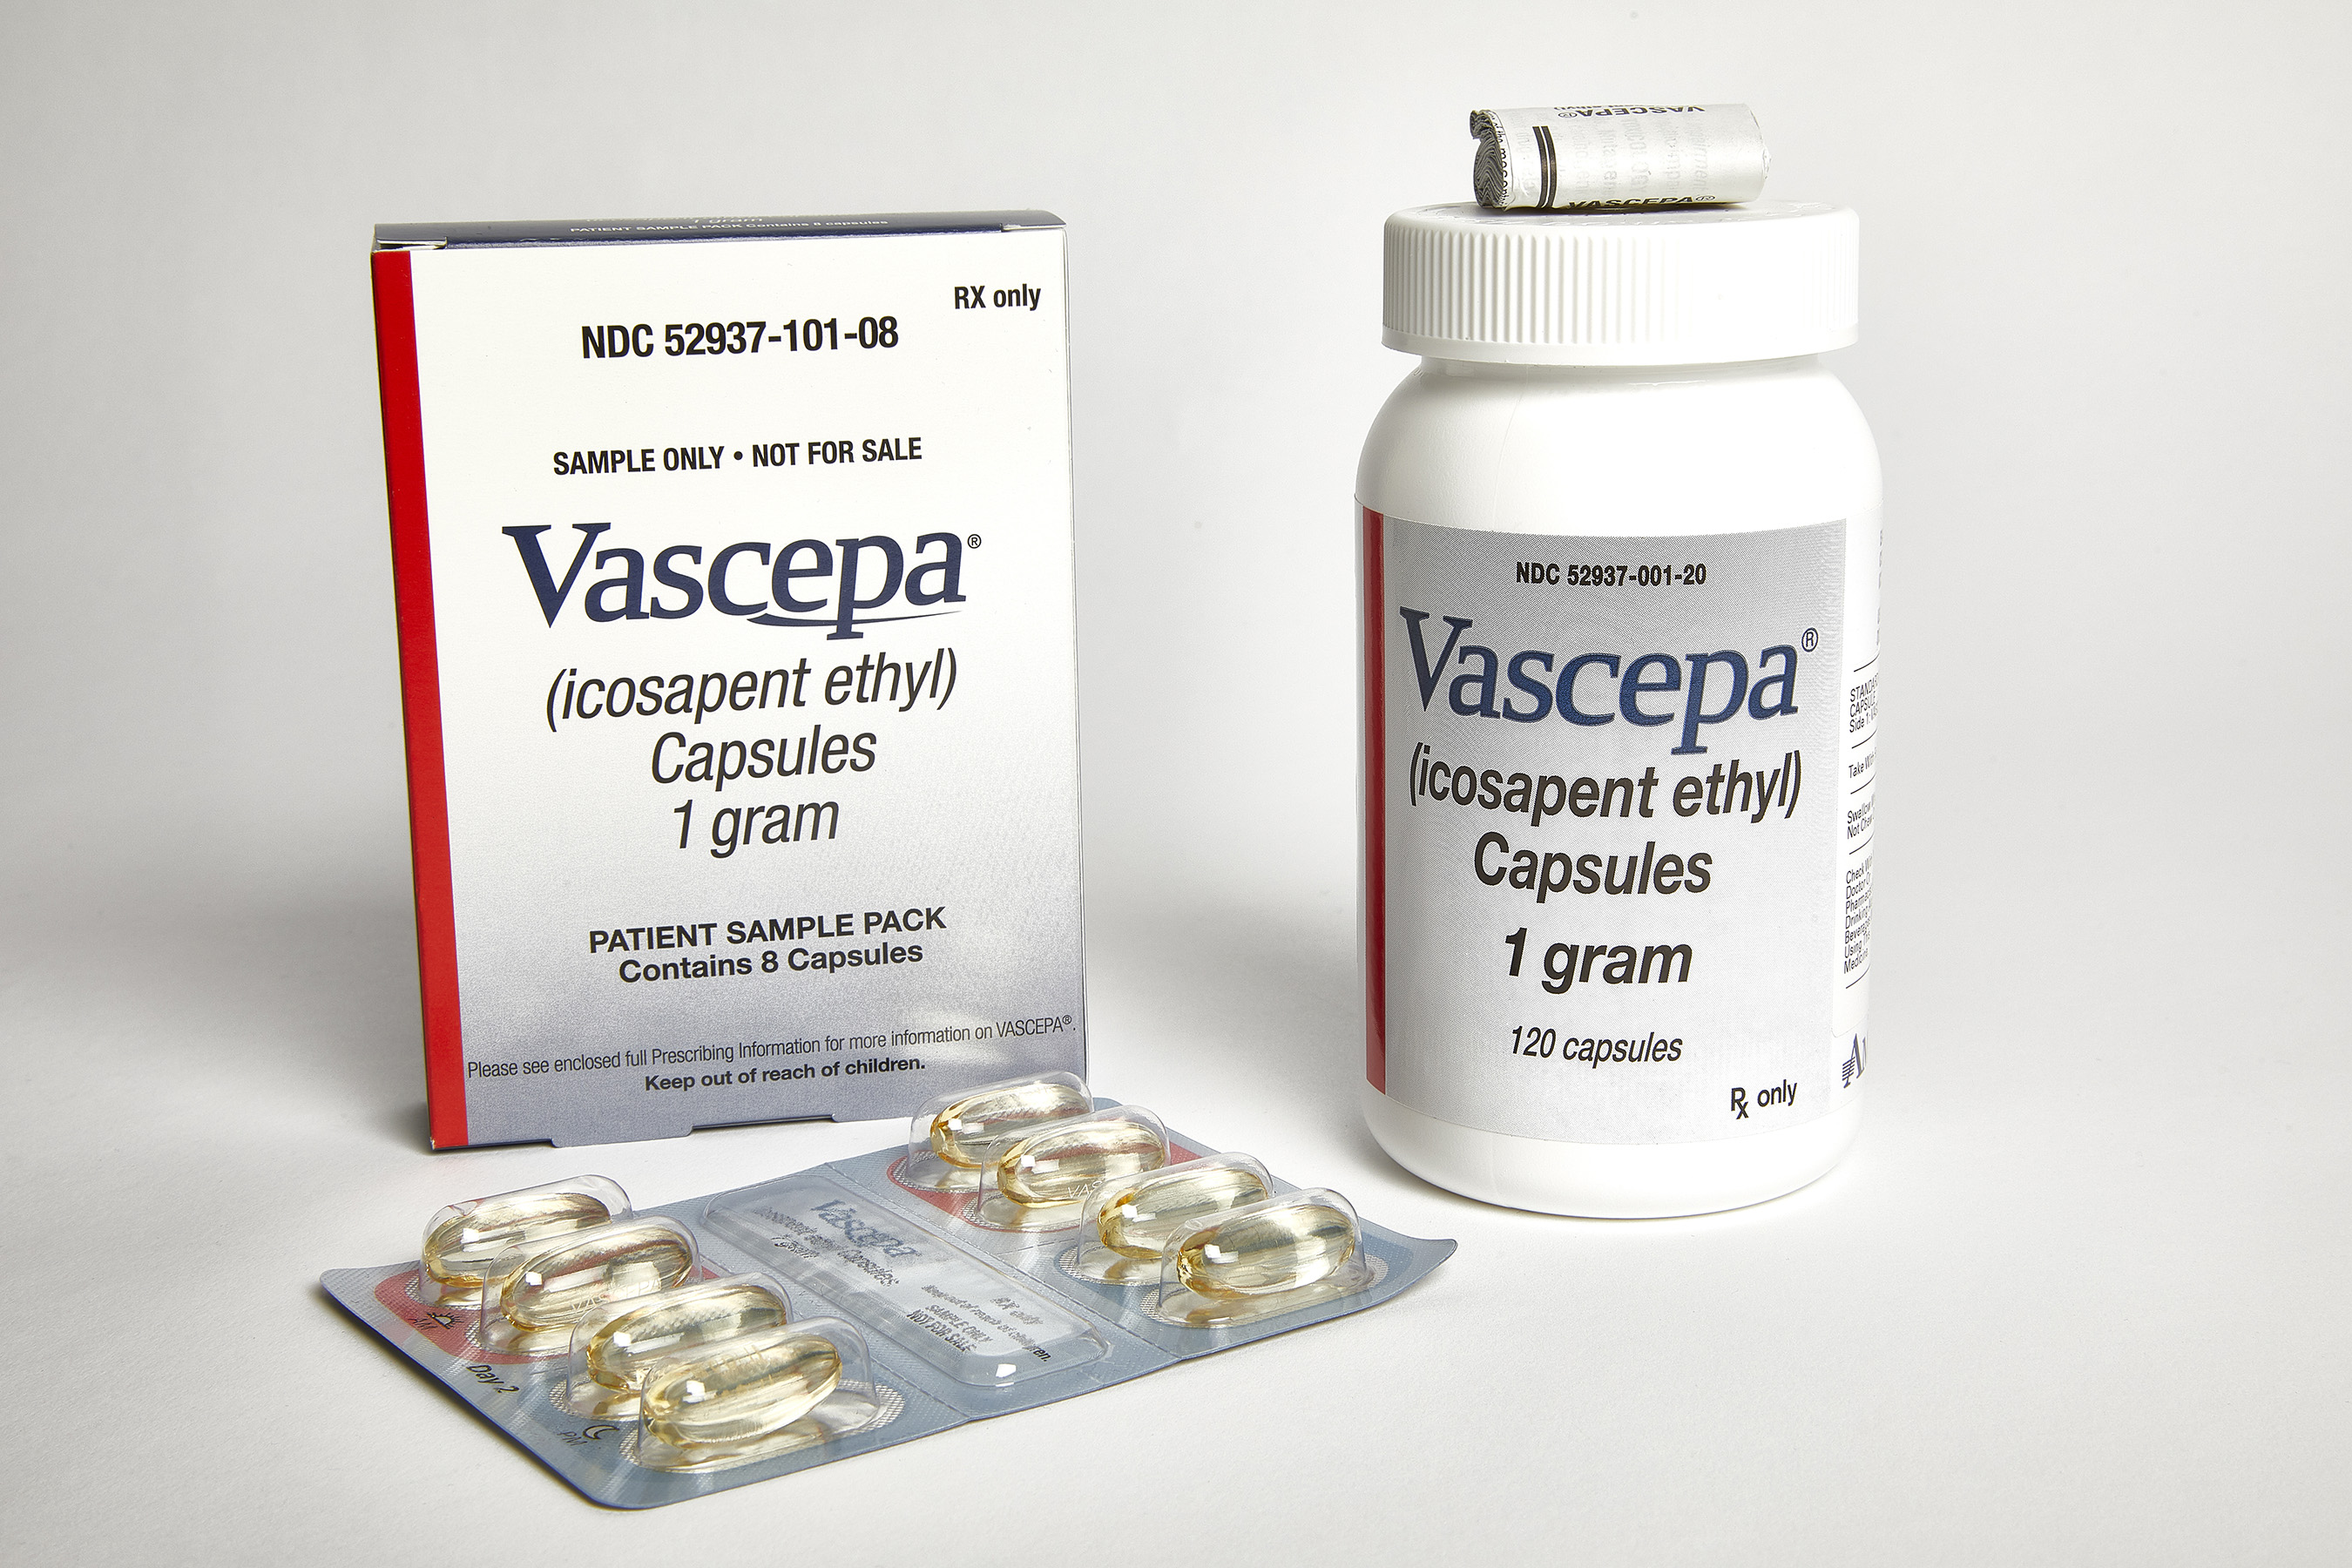 二十碳五烯酸乙酯胶囊(Vascepa) icosapent ethyl